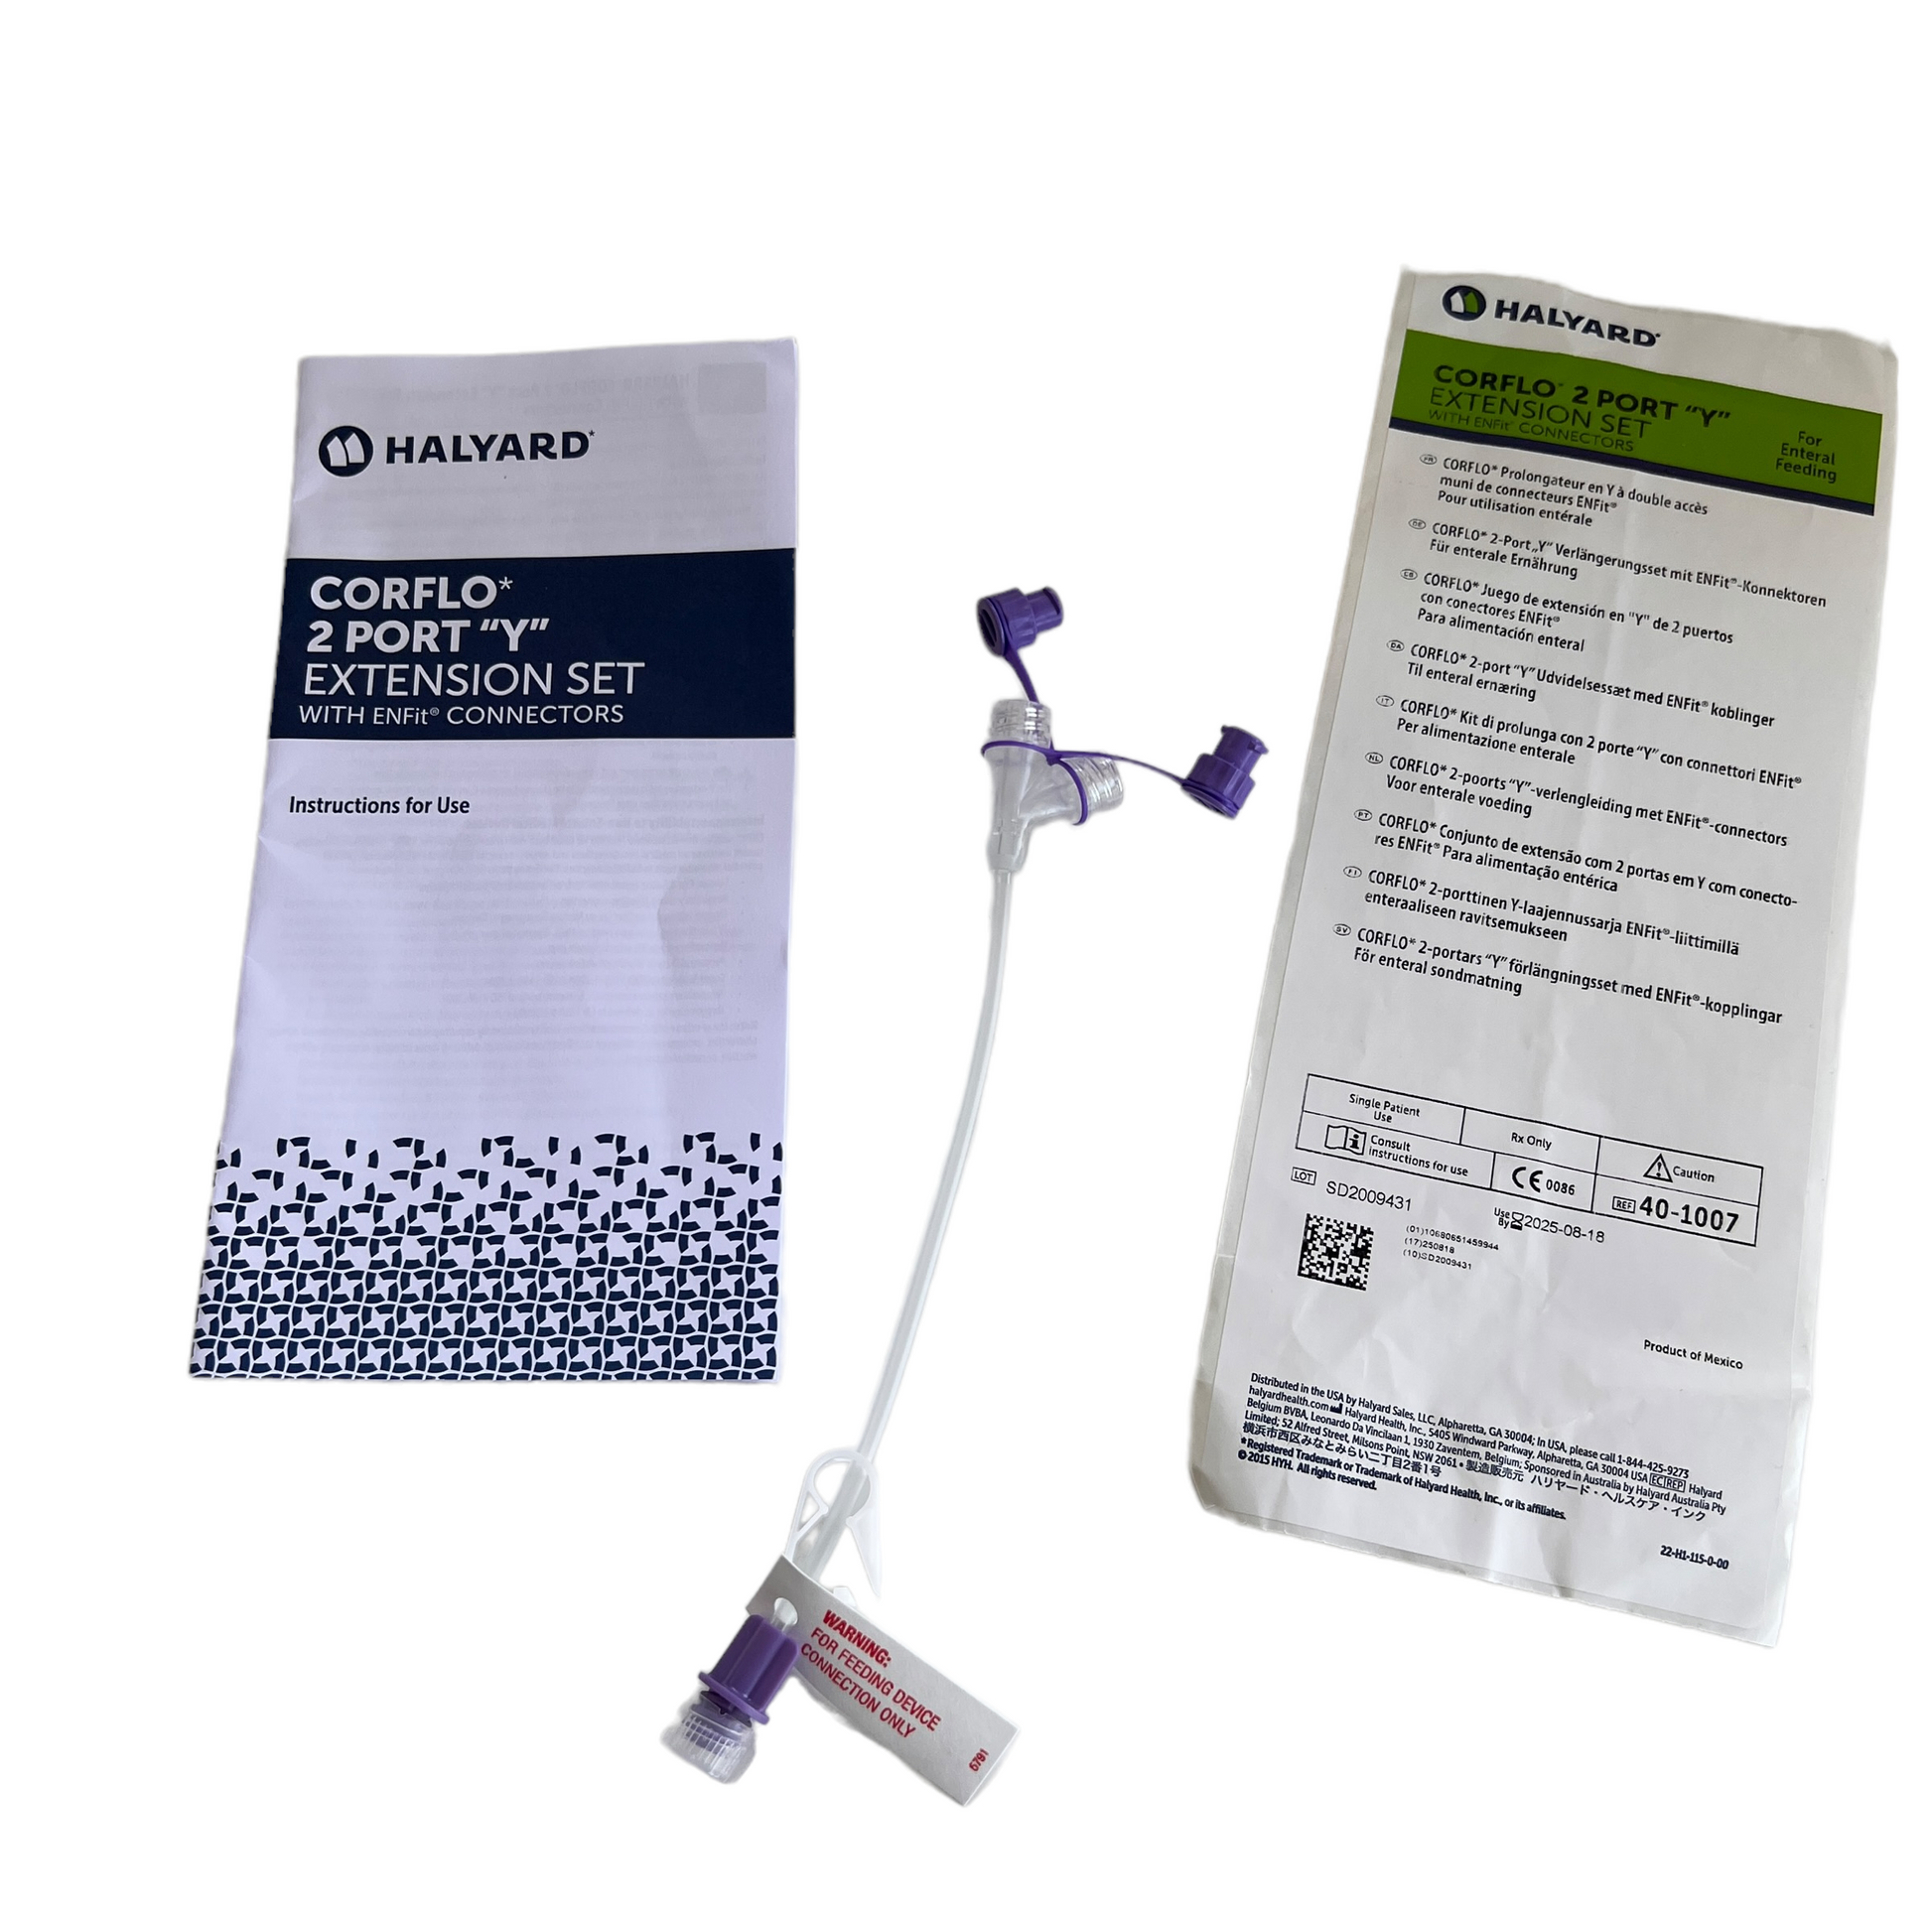 ENFit Feeding Tube Extension Set by Corflo (Short) Medical Supplies SPIRIT SPARKPLUGS   